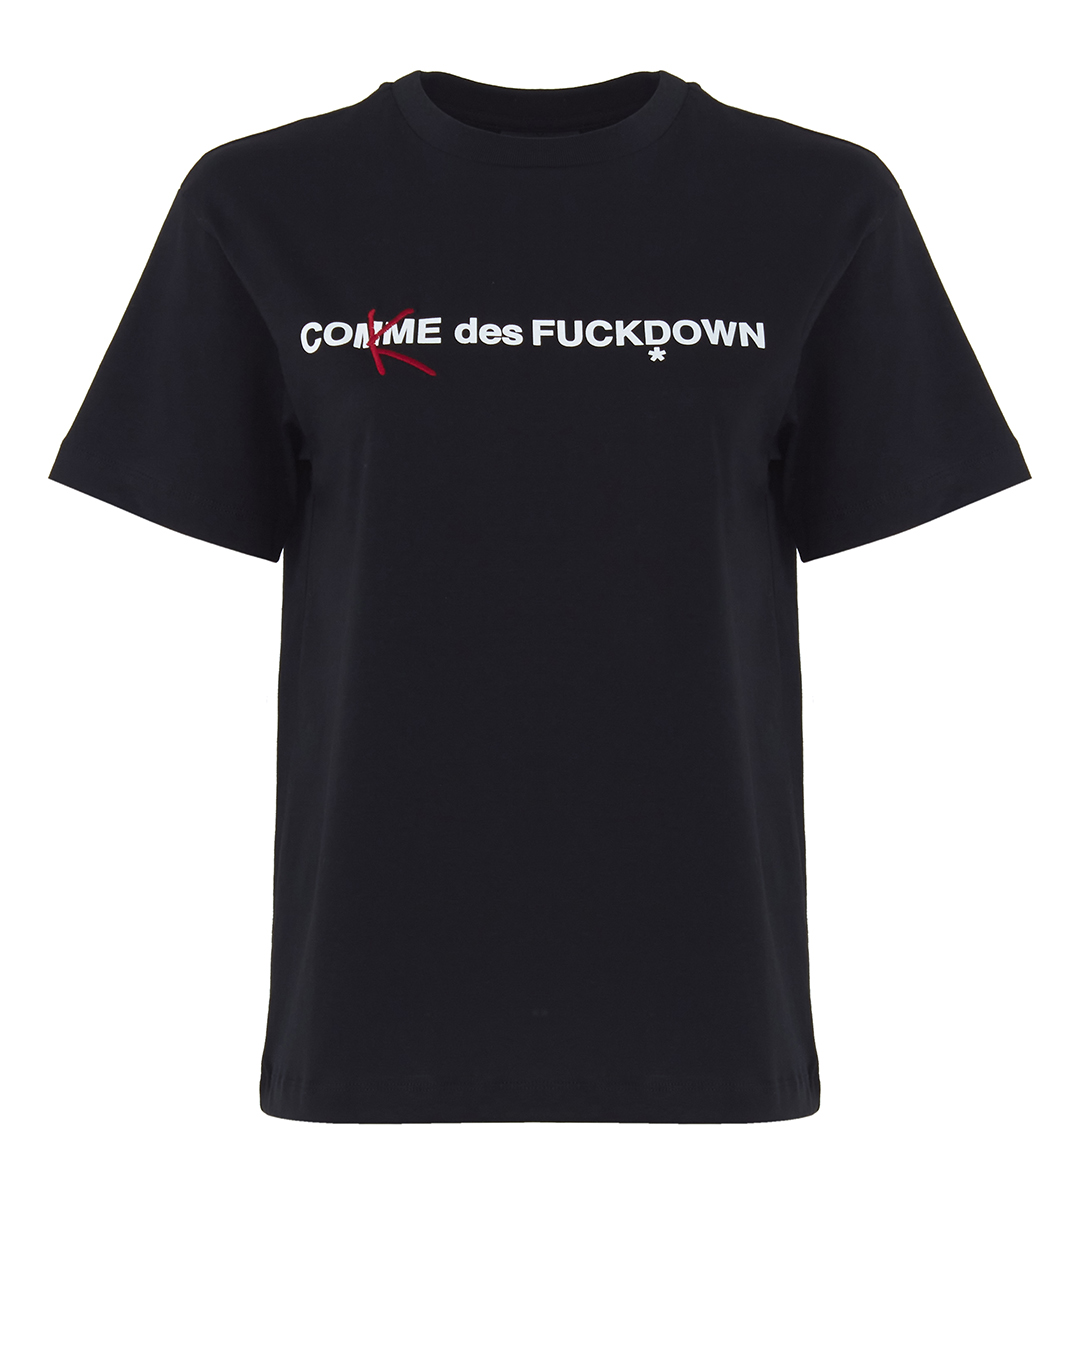 COMME des FUCKDOWN с принтом на спине  артикул  марки COMME des FUCKDOWN купить за 9900 руб.